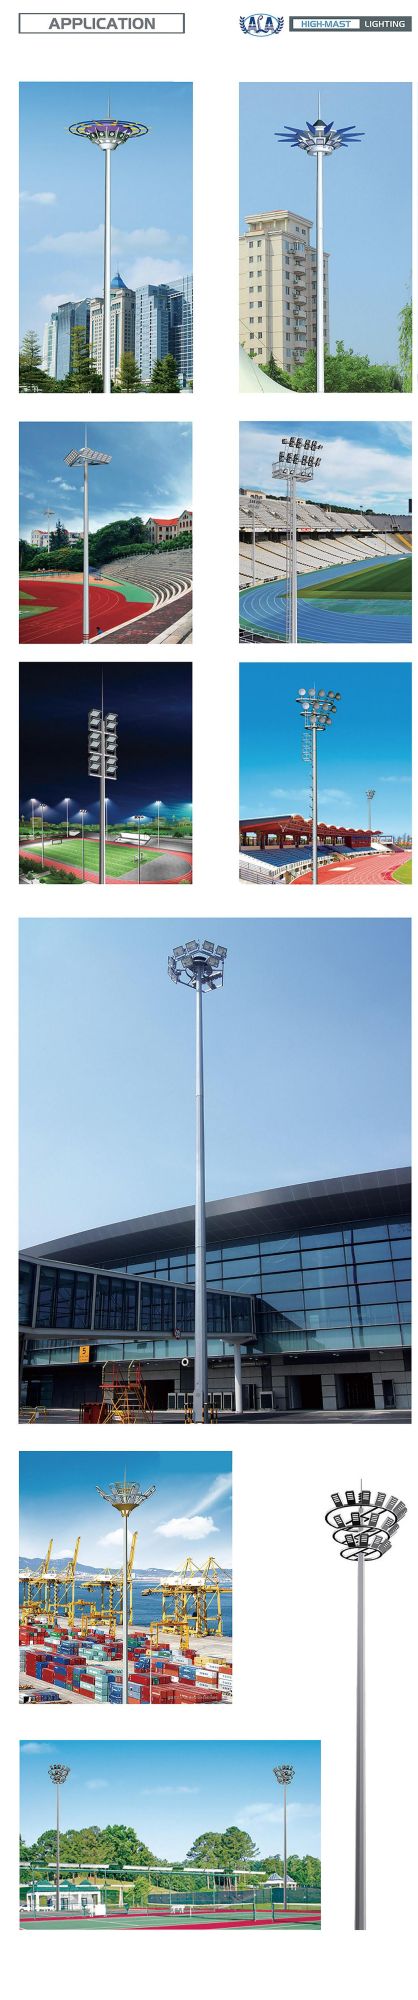 Ala Football Ground Lighting 1000W High Power LED Flood Light High Mast Light